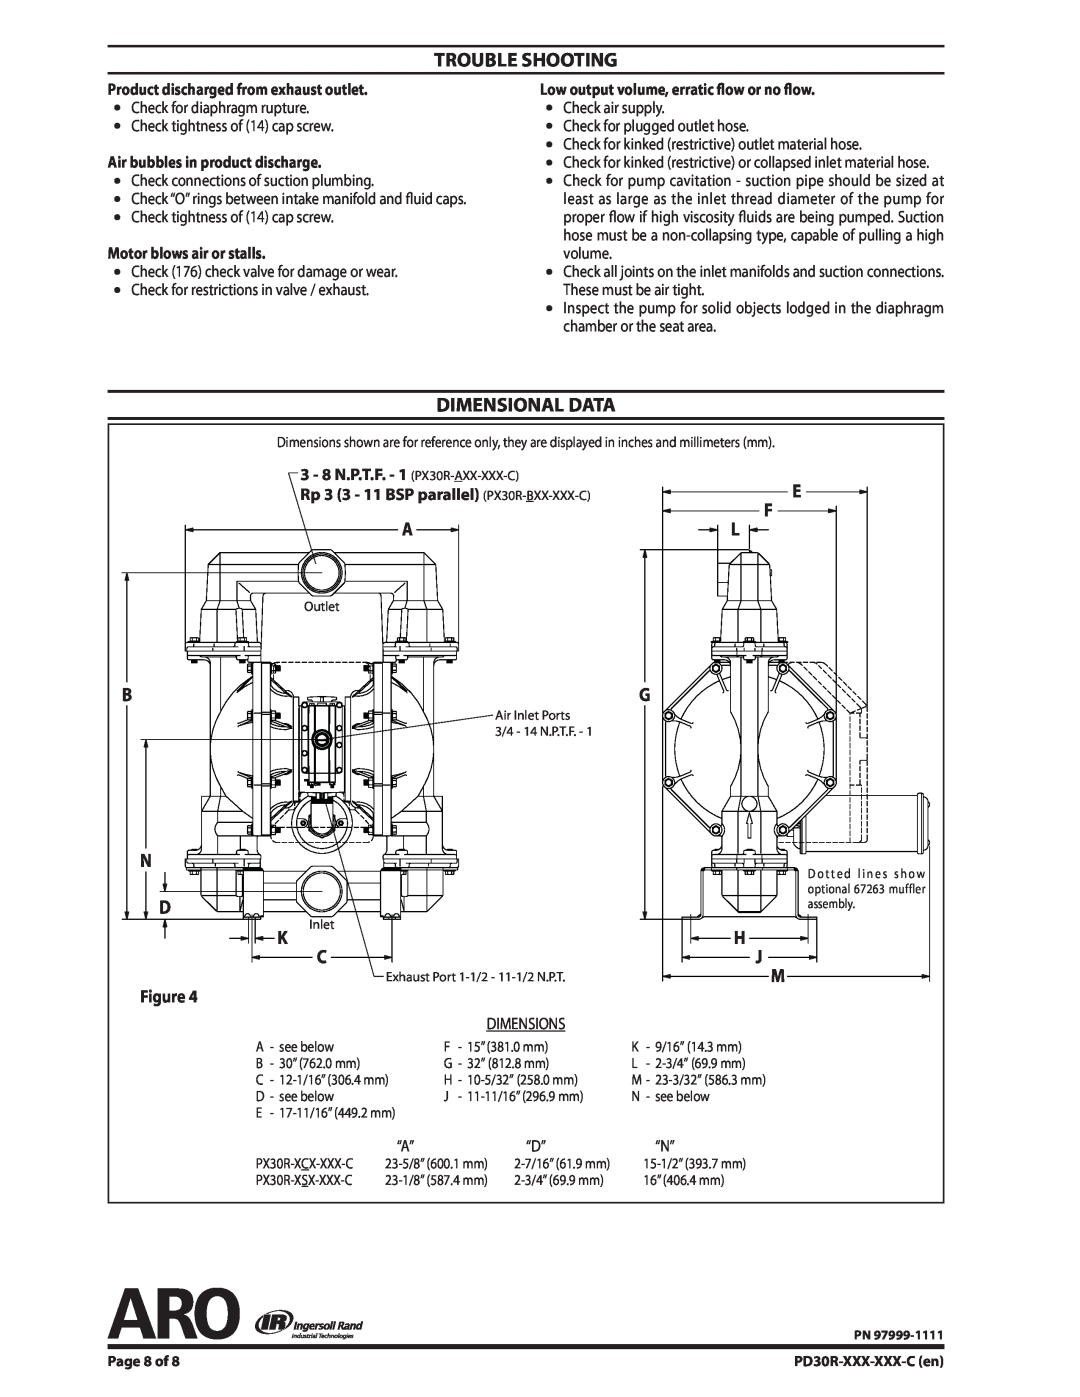 Ingersoll-Rand PD30R-XXX-XXX-C dimensions Trouble Shooting, Dimensional Data 